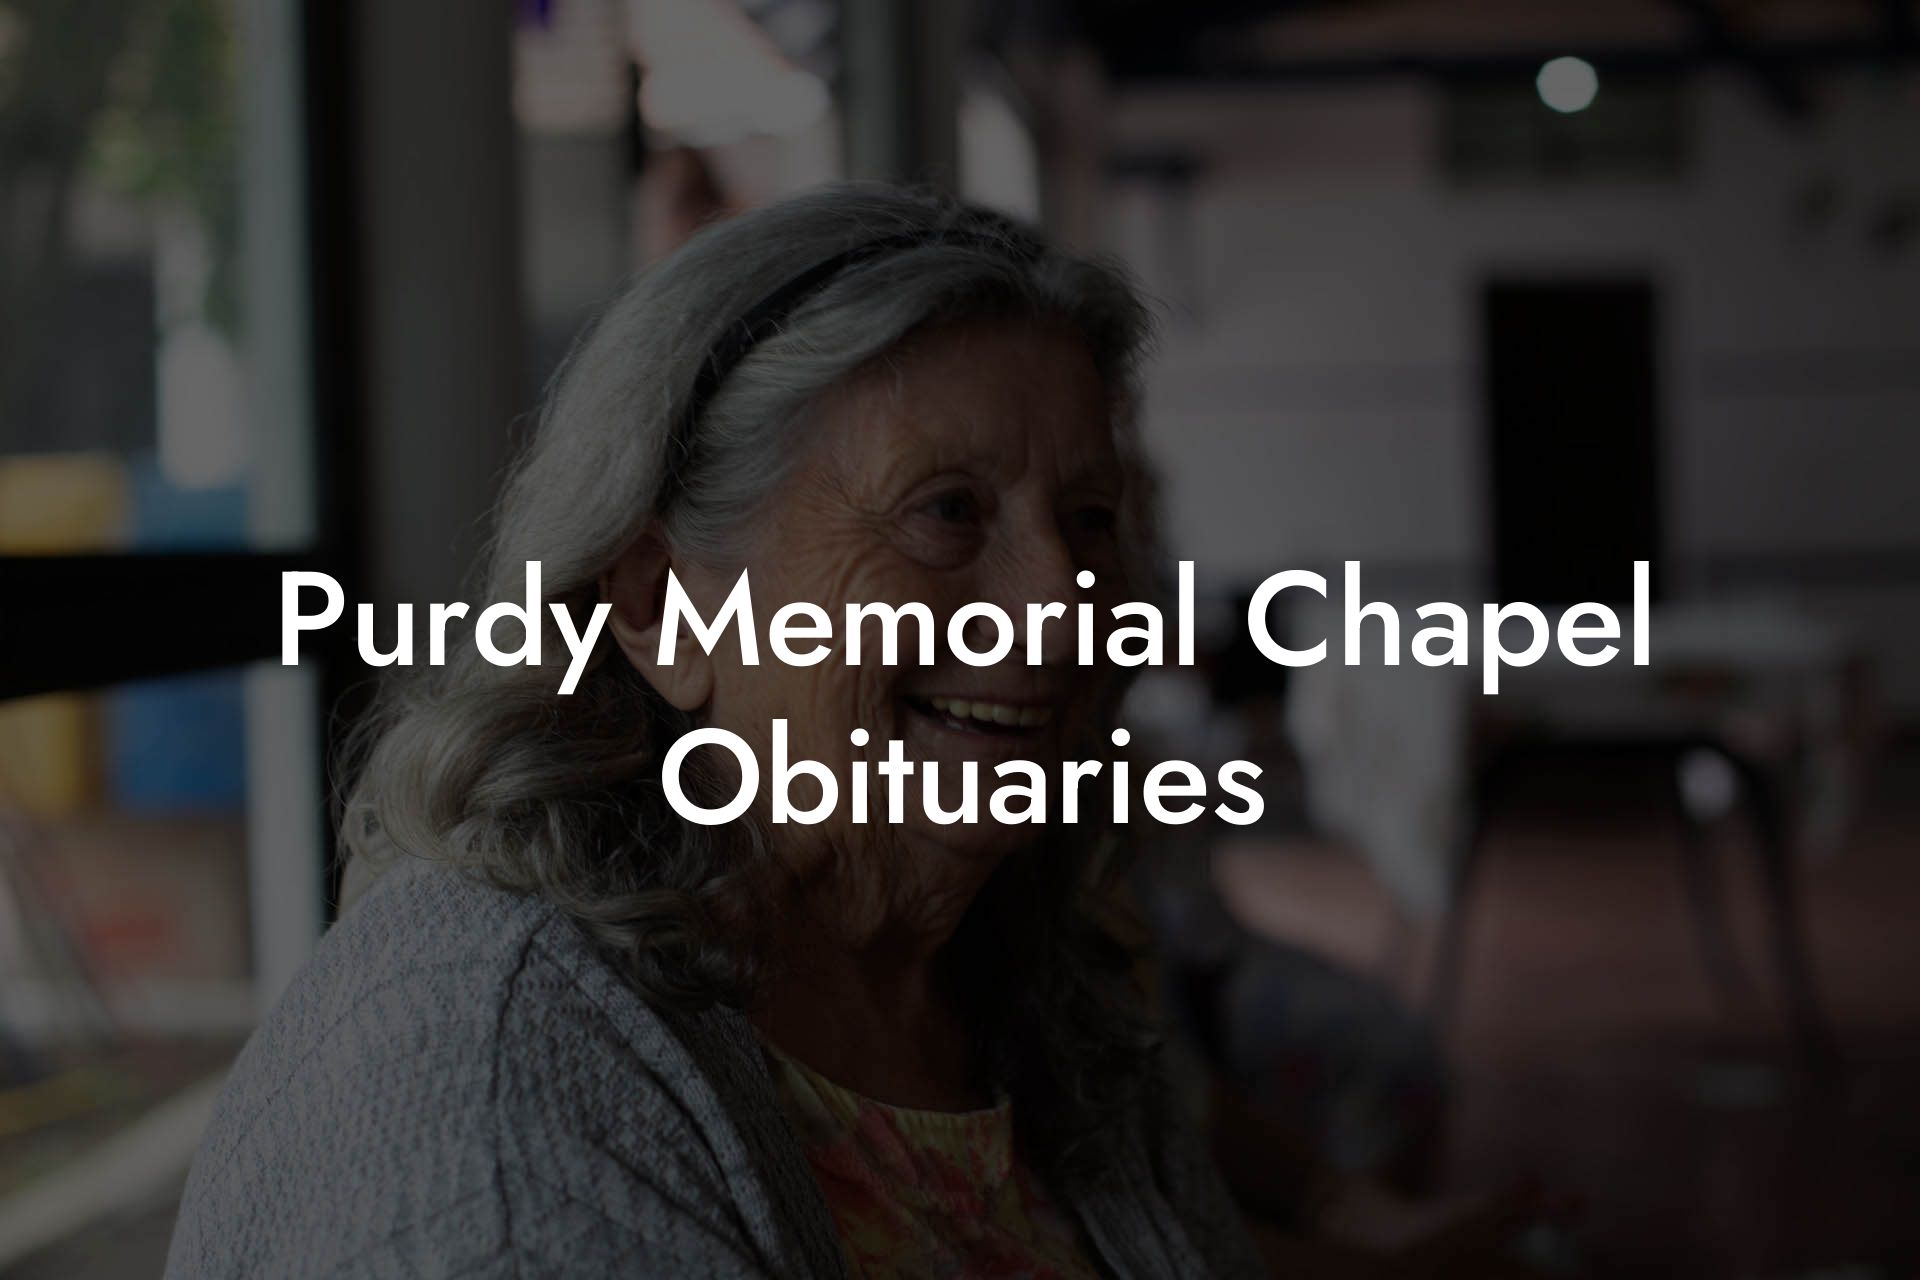 Purdy Memorial Chapel Obituaries